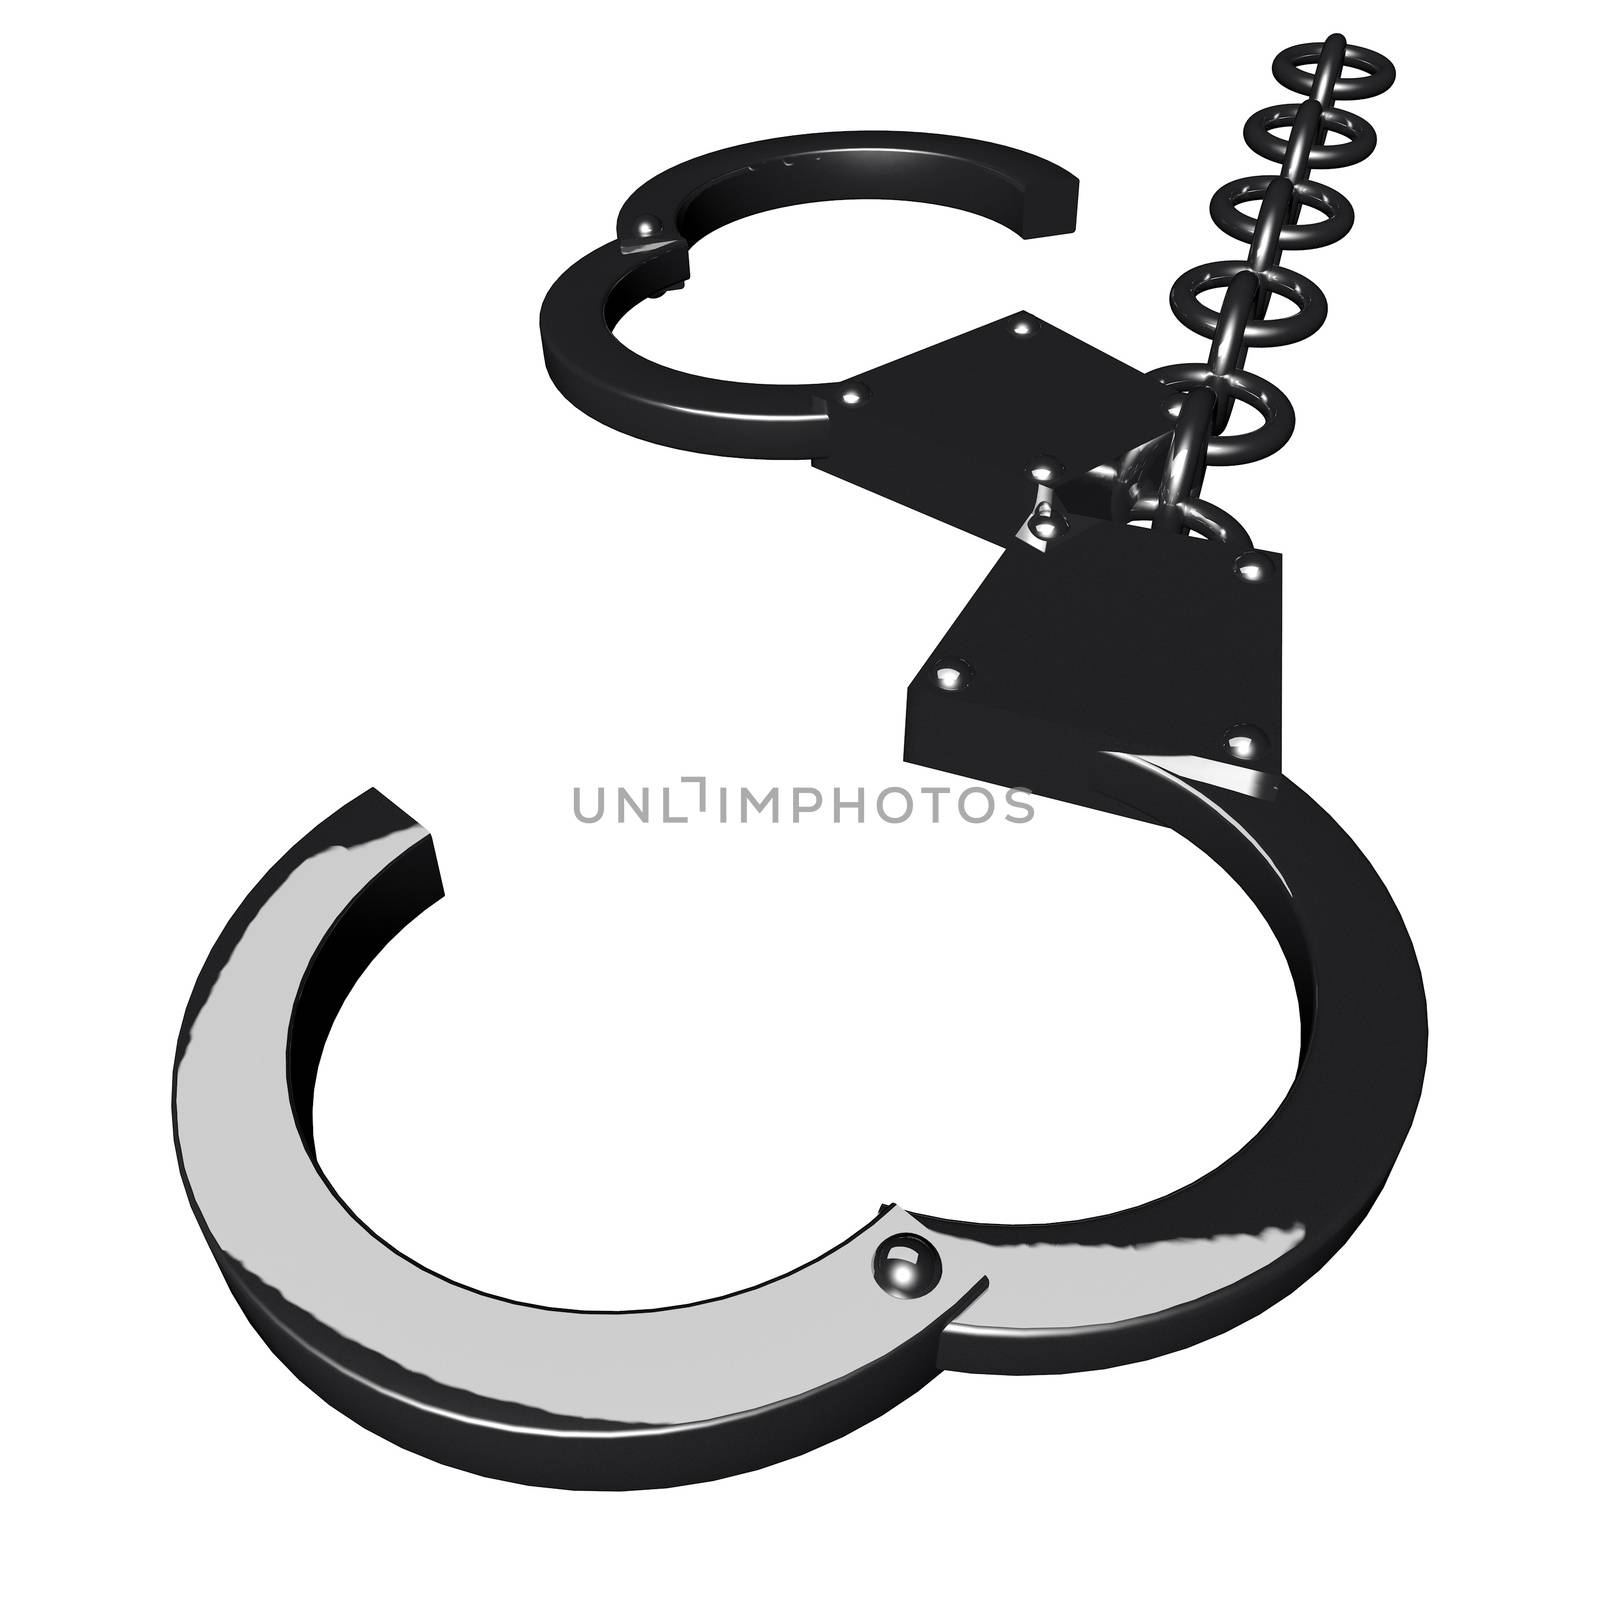 Handcuffs by Koufax73